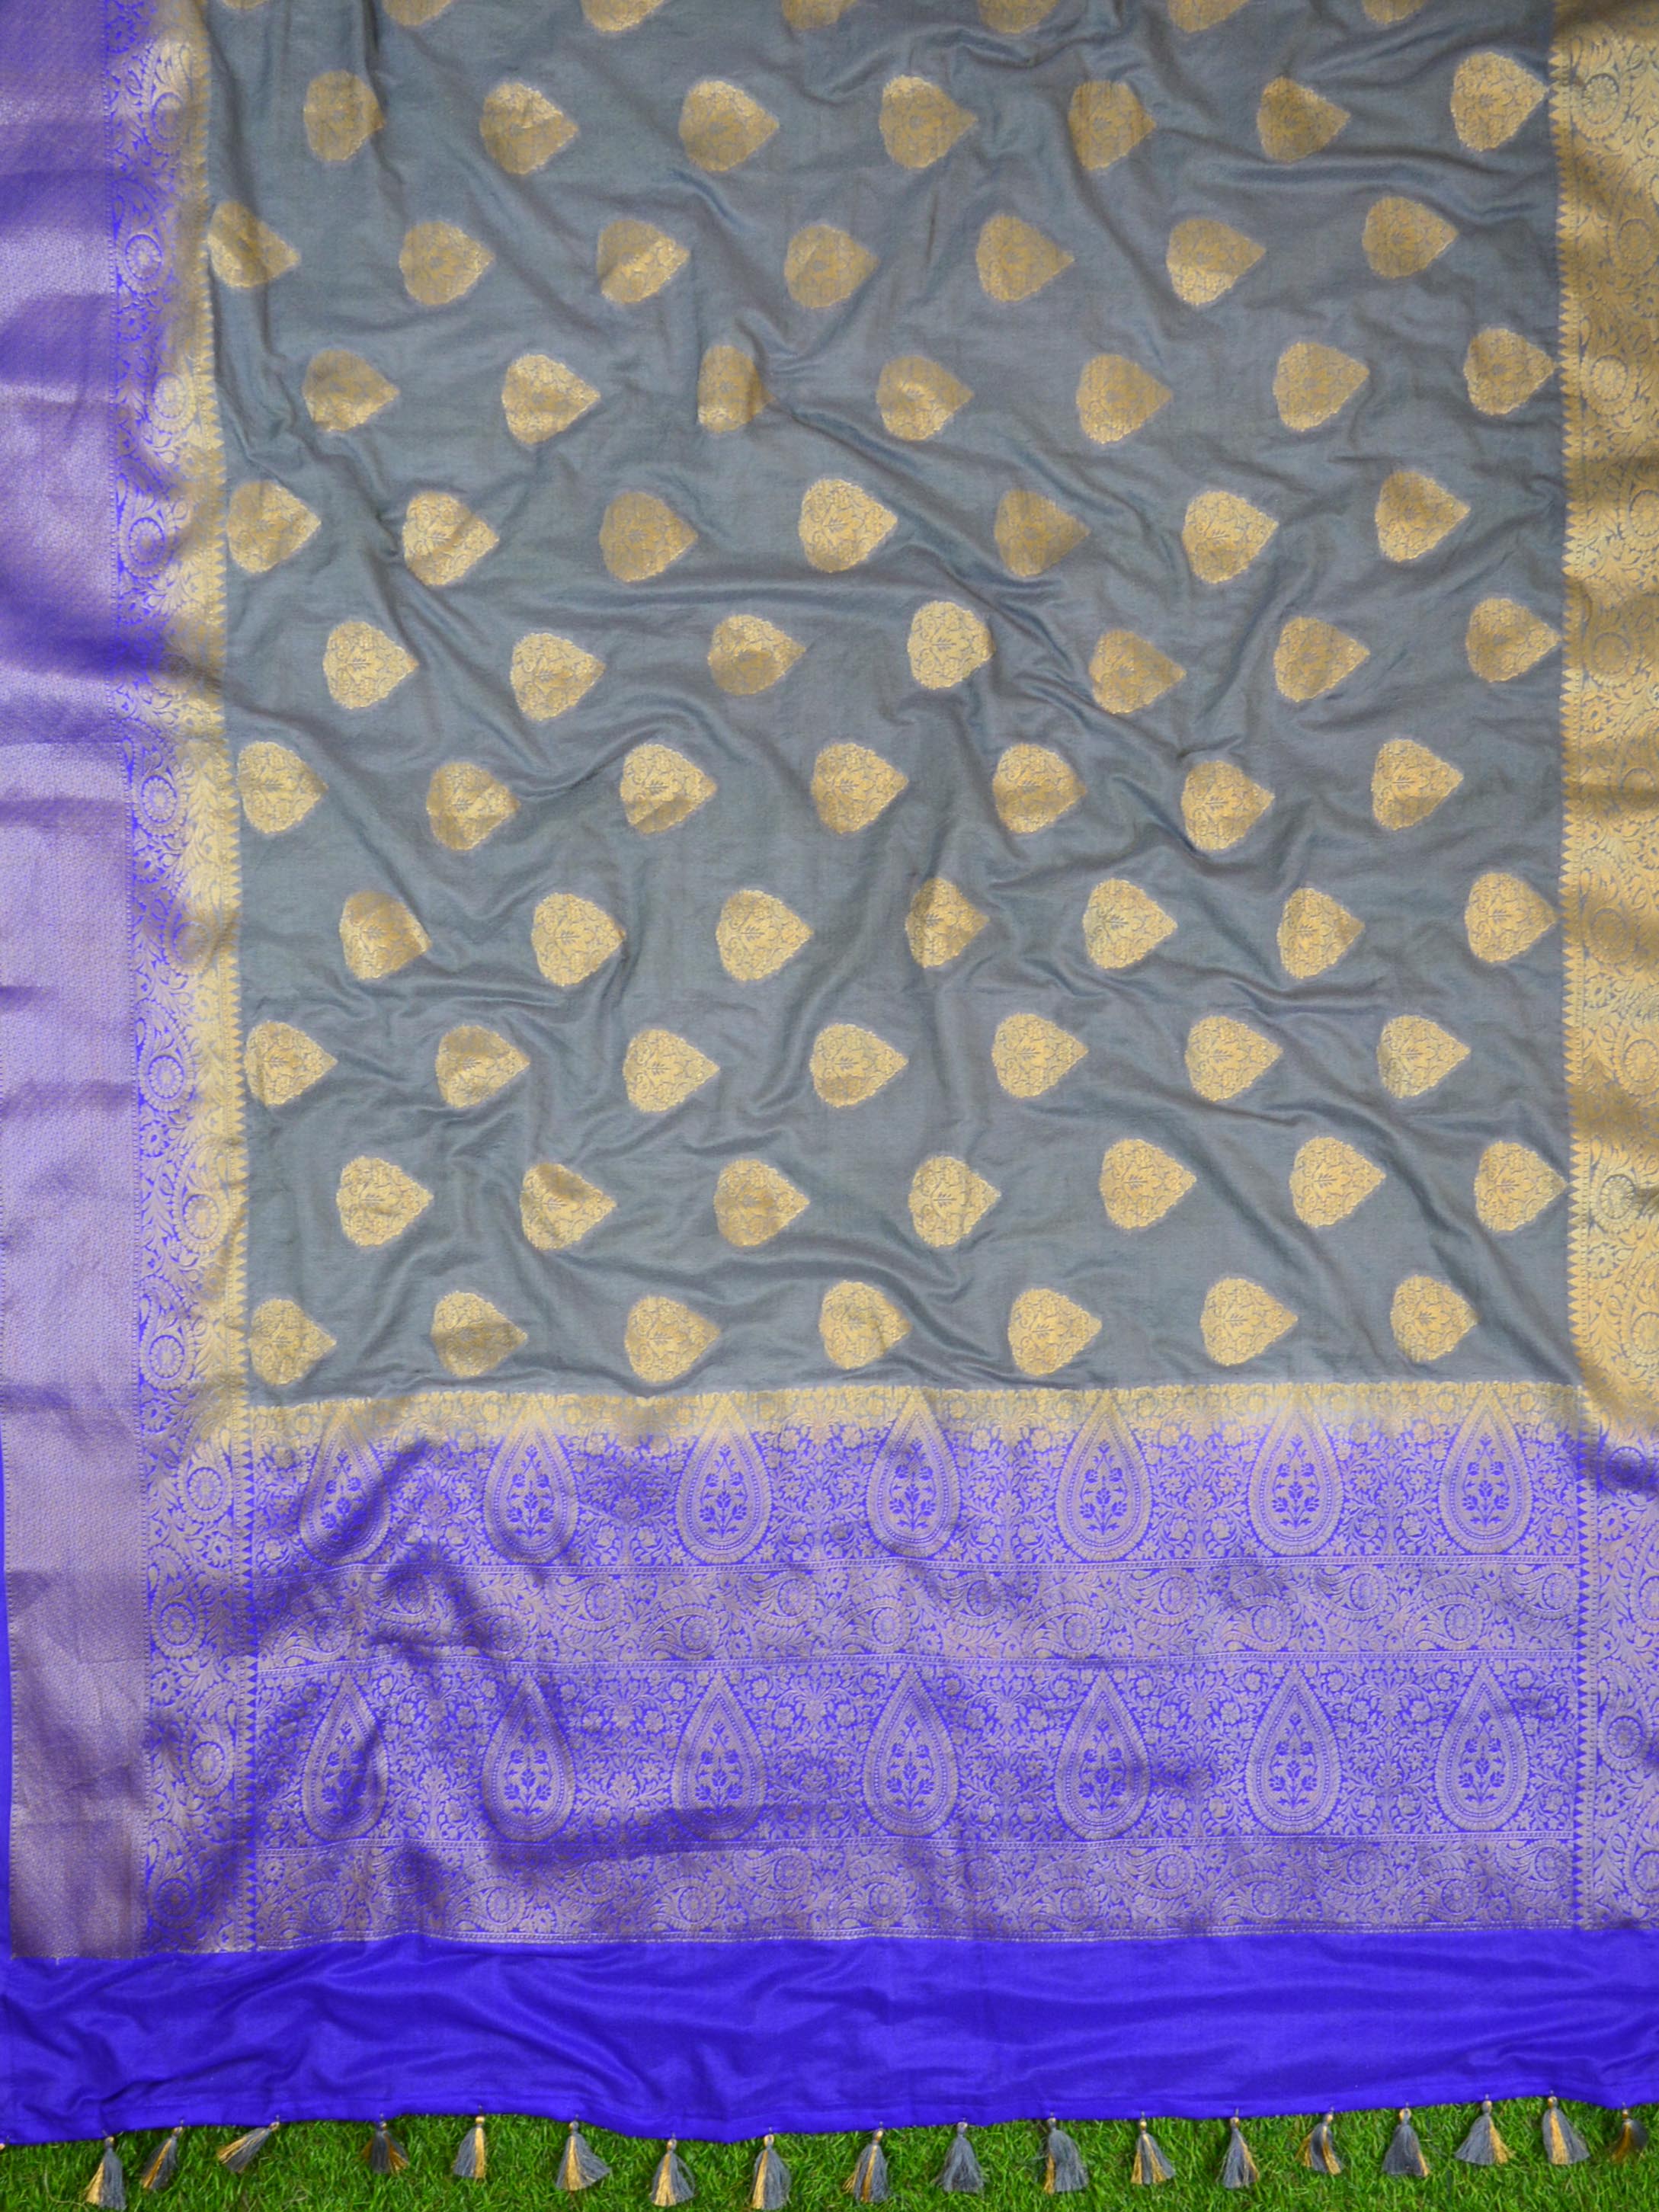 Banarasee Handwoven Semi-Chiffon Sari With Buta Design-Gray With Blue